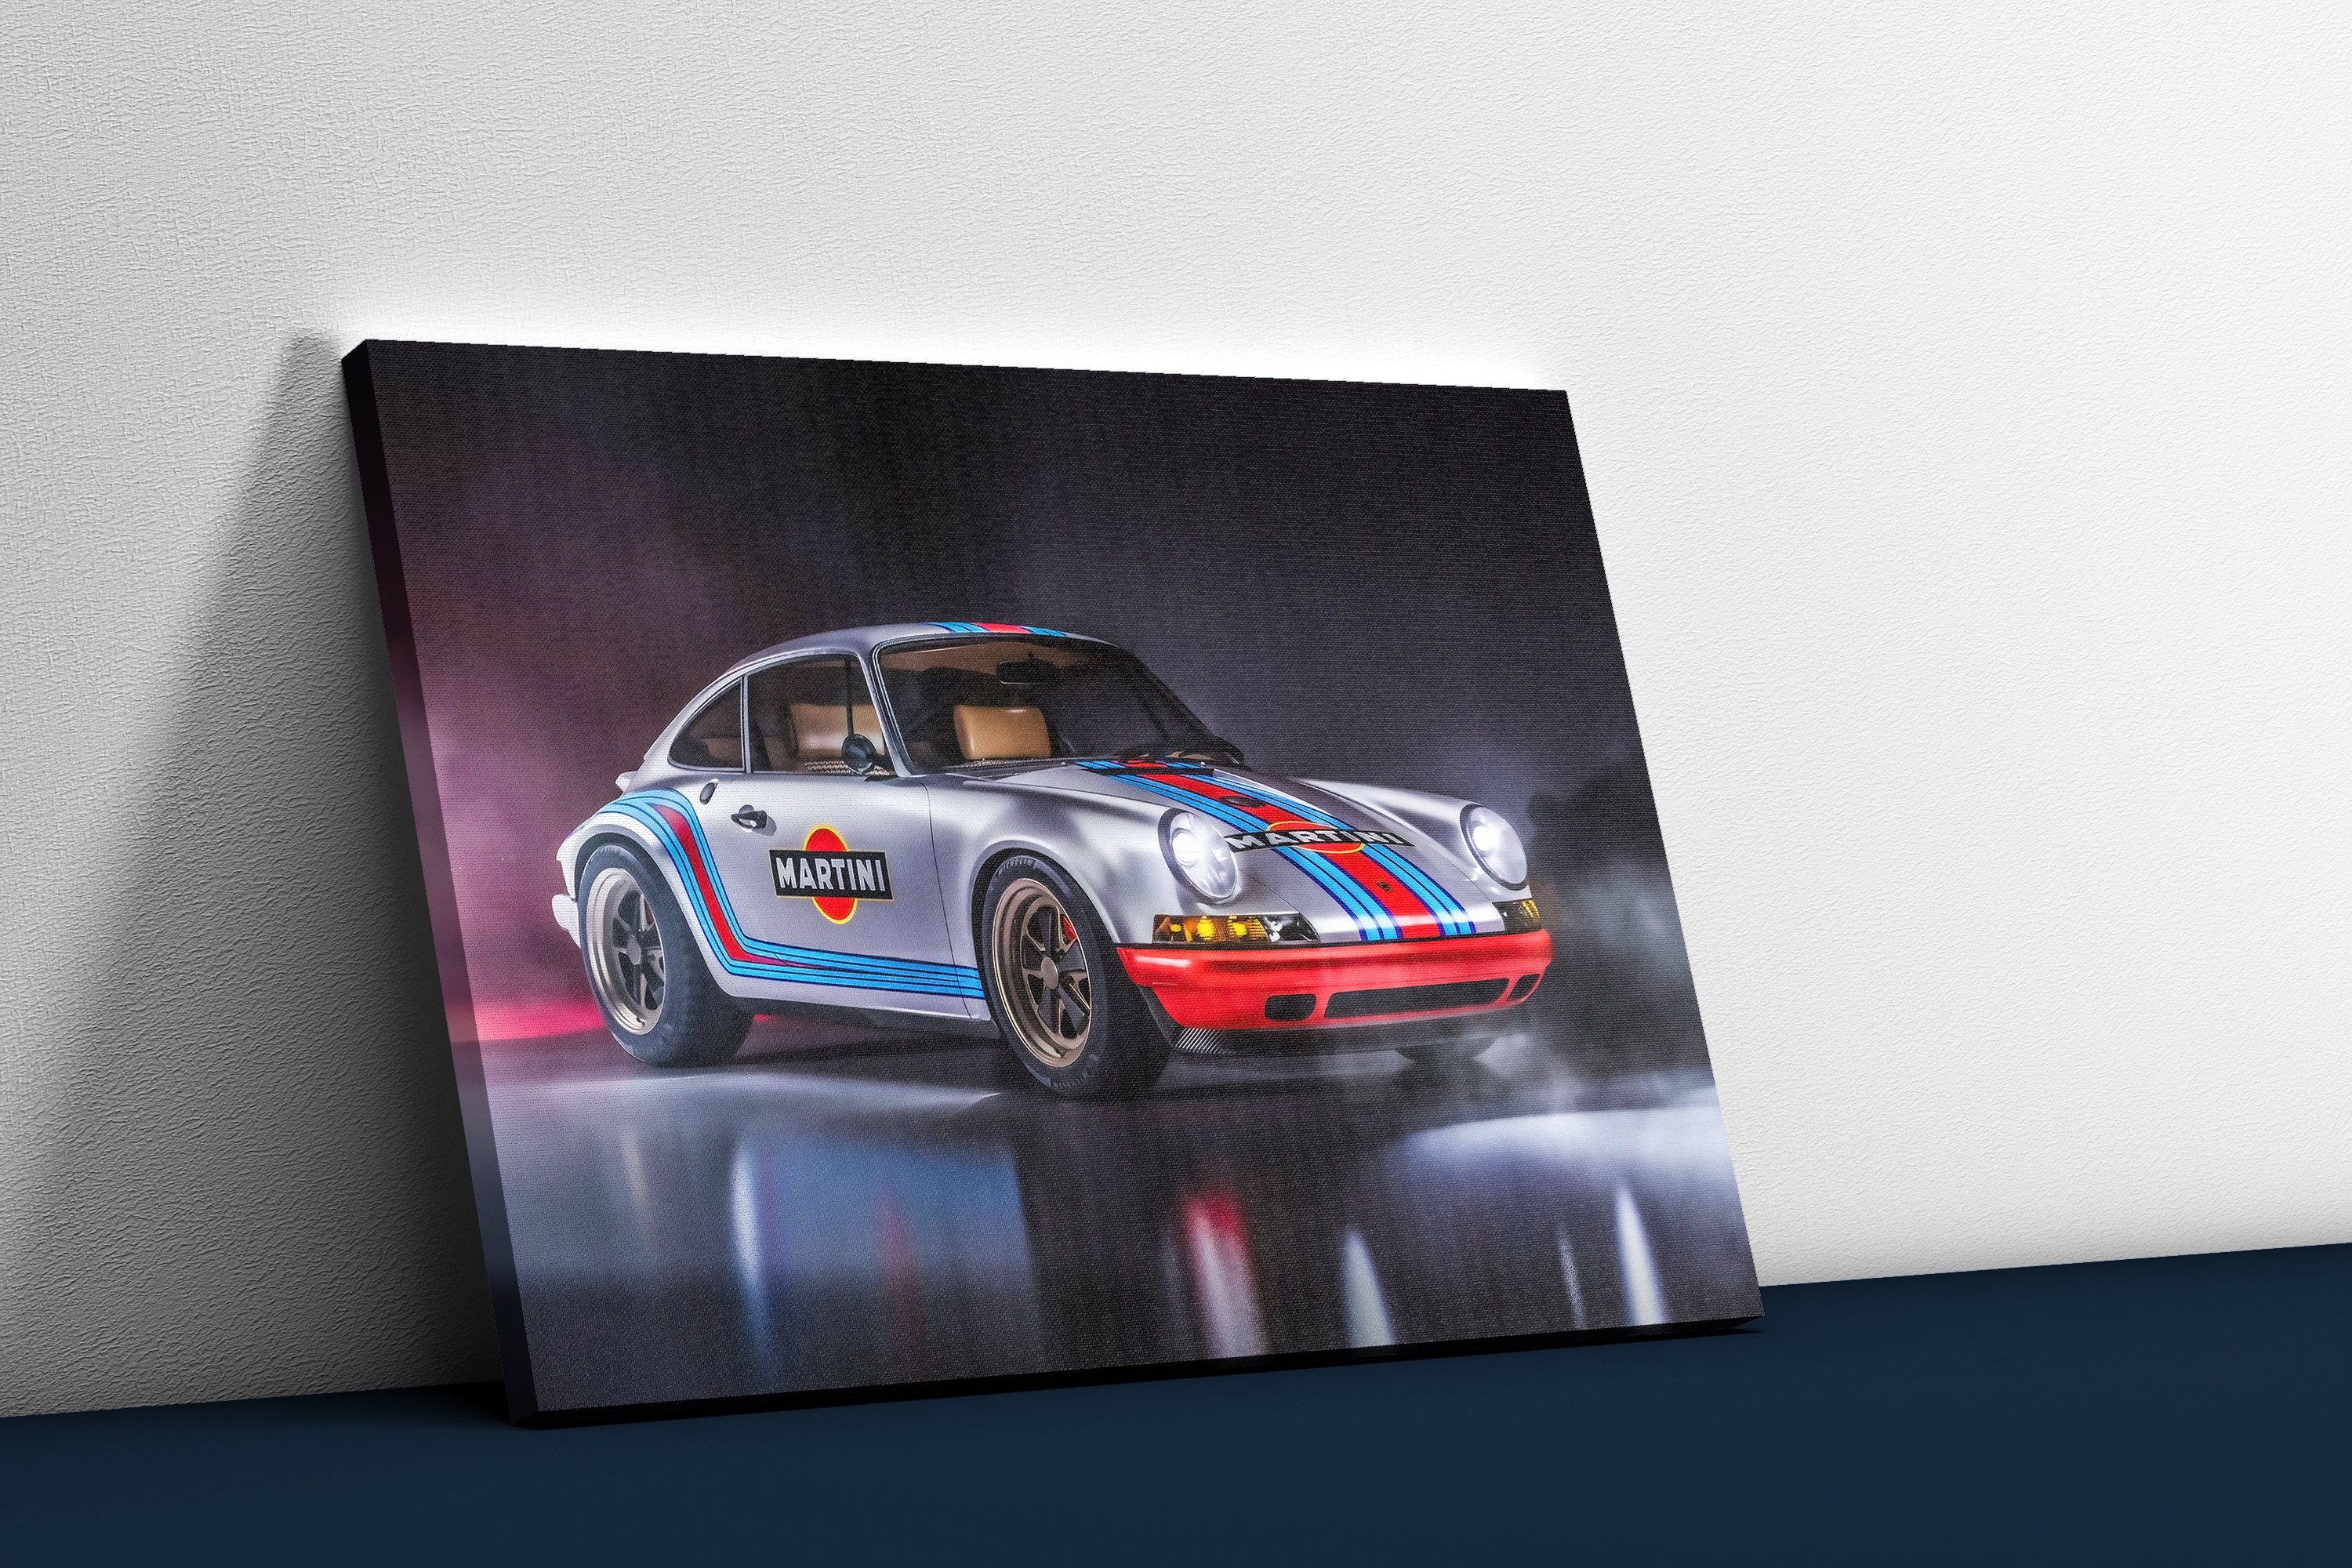 Porsche 911 Wall Art, Poster, Paper or Canvas Print, Historic Racing Car,  Martini, Man Cave Decor, Gift Idea 